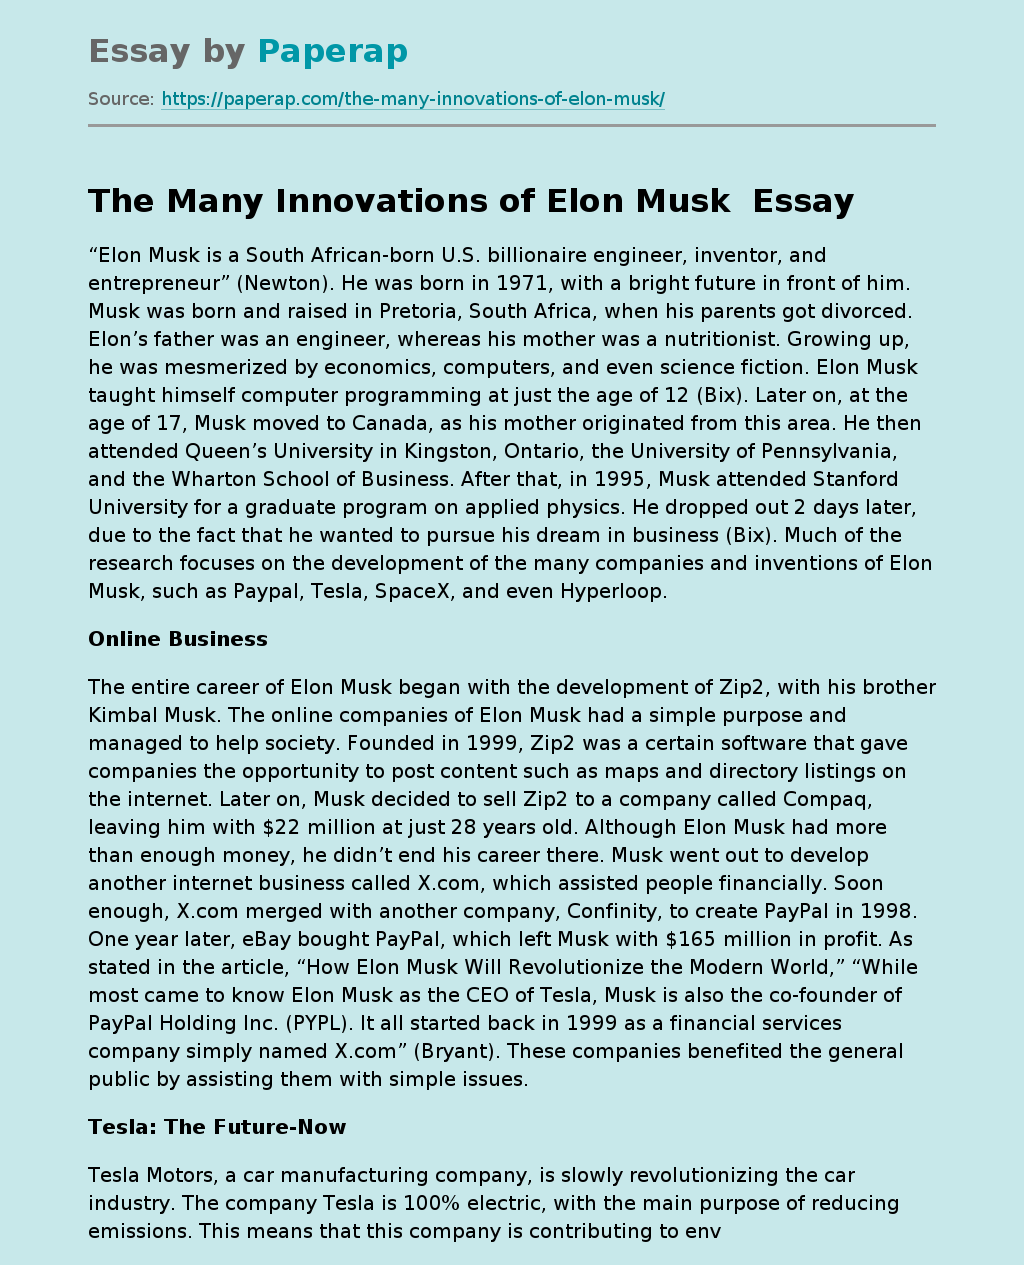 The Many Innovations of Elon Musk 